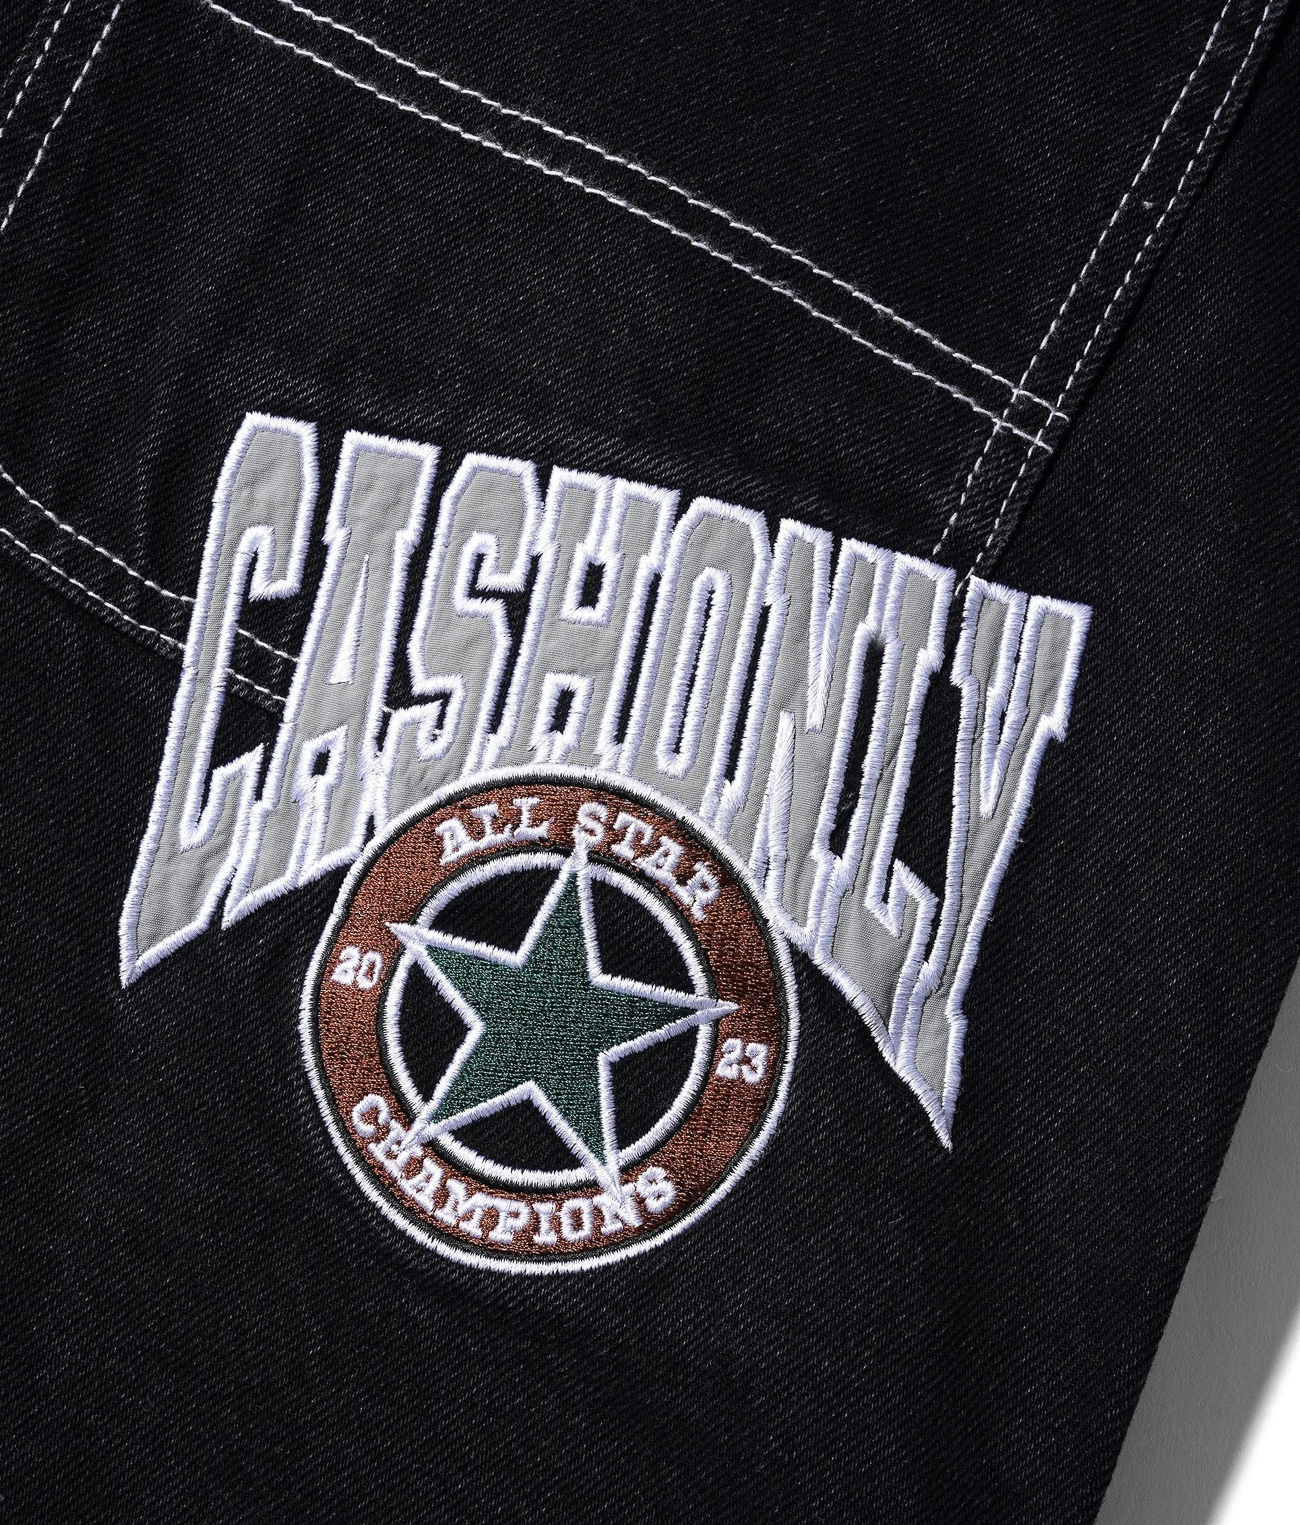 Cash Only All Star Baggy Denim Jeans Black 3